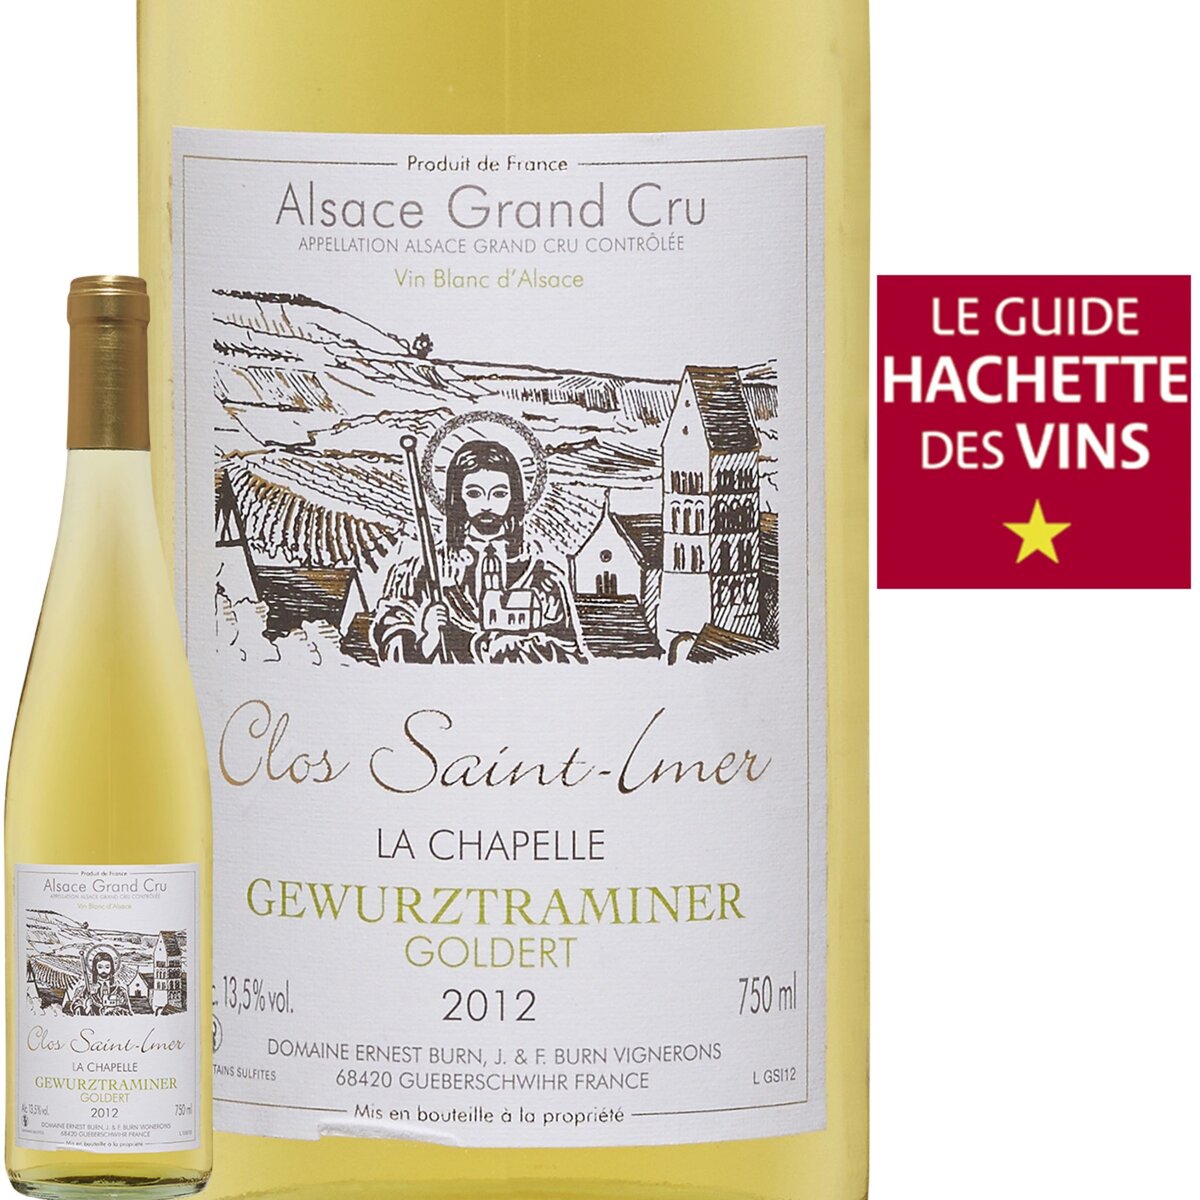 Goldert Clos Saint-Imer La Chapelle Alsace Grand Cru Gewurztraminer Blanc 2012